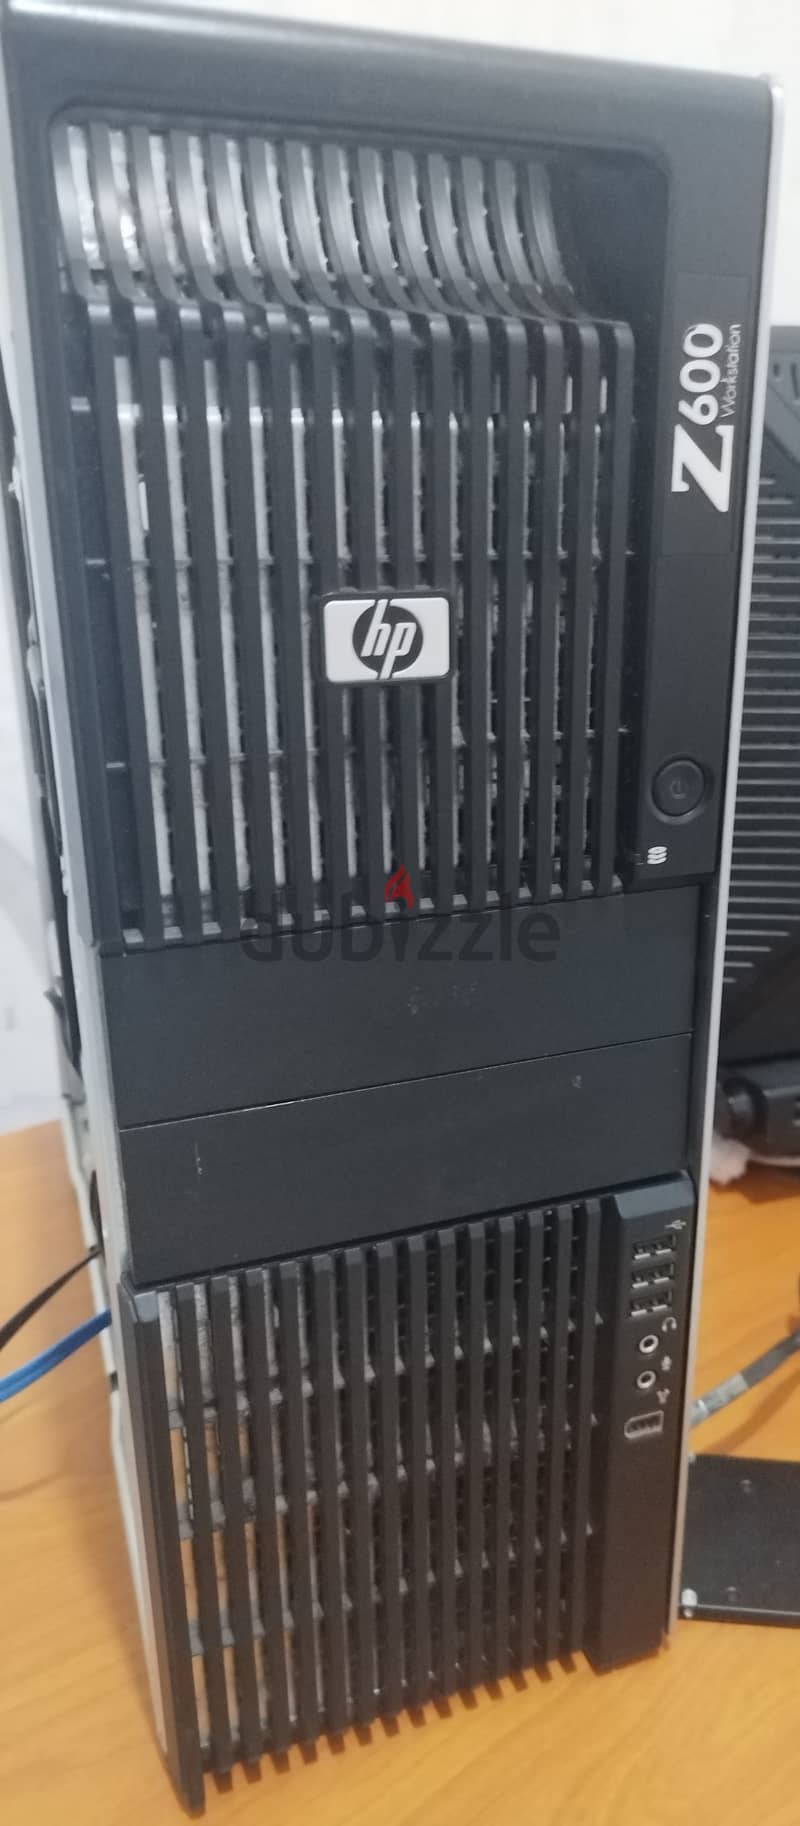 HP Z600 WORKSTATION 2